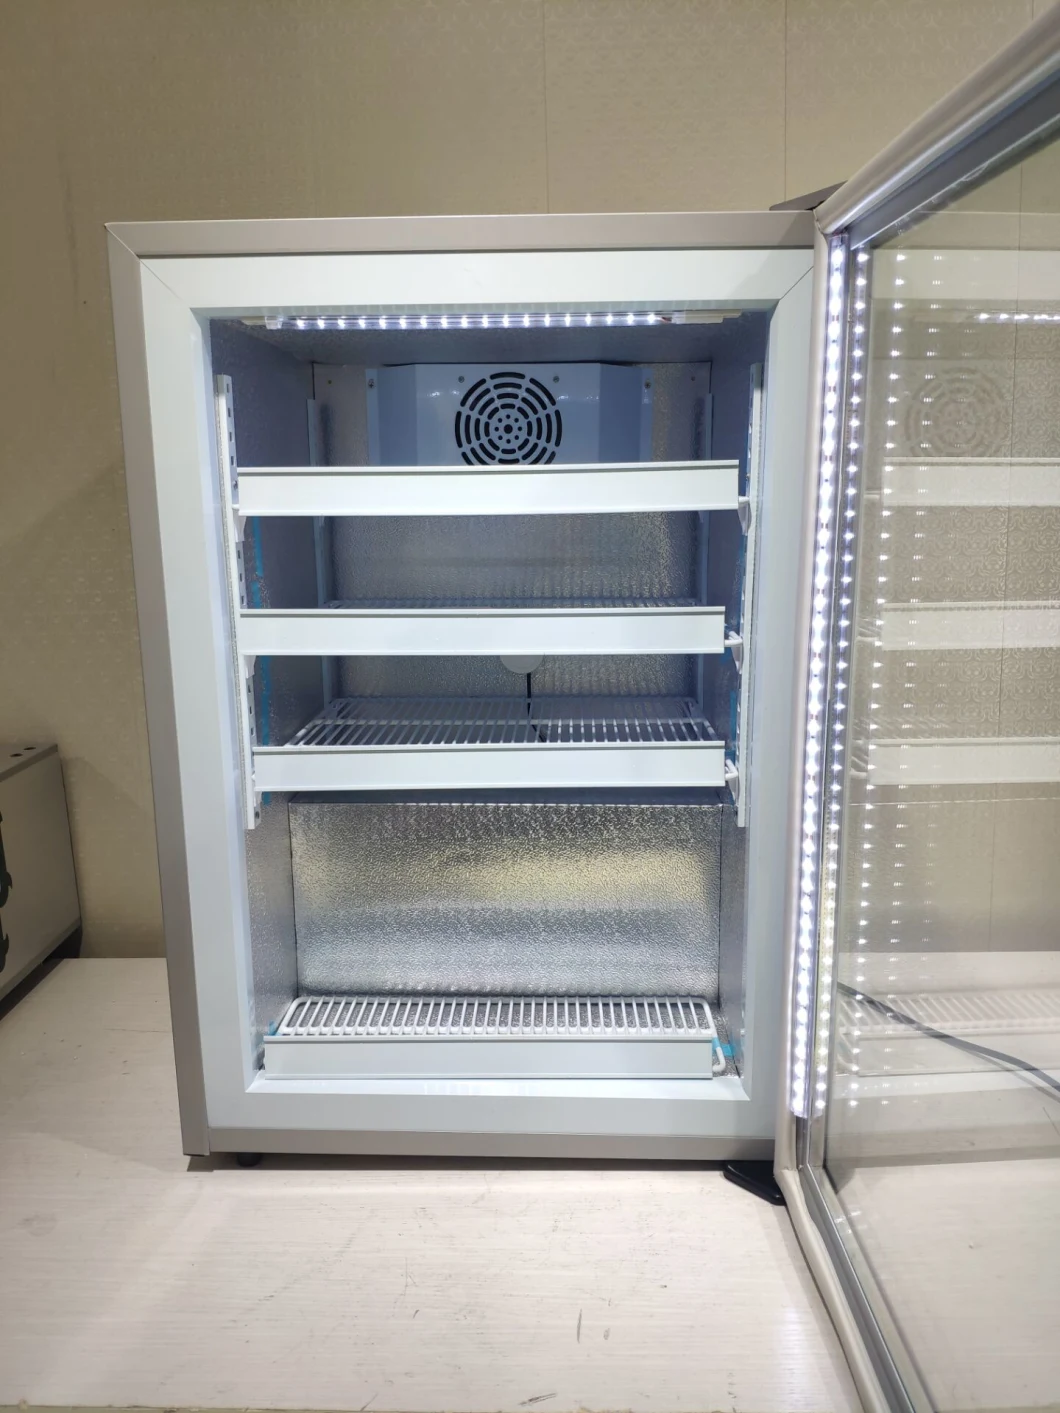 Smeta 99L Ice Cream Display Freezer Commercial Counter Top Gelato Freezer Display Case